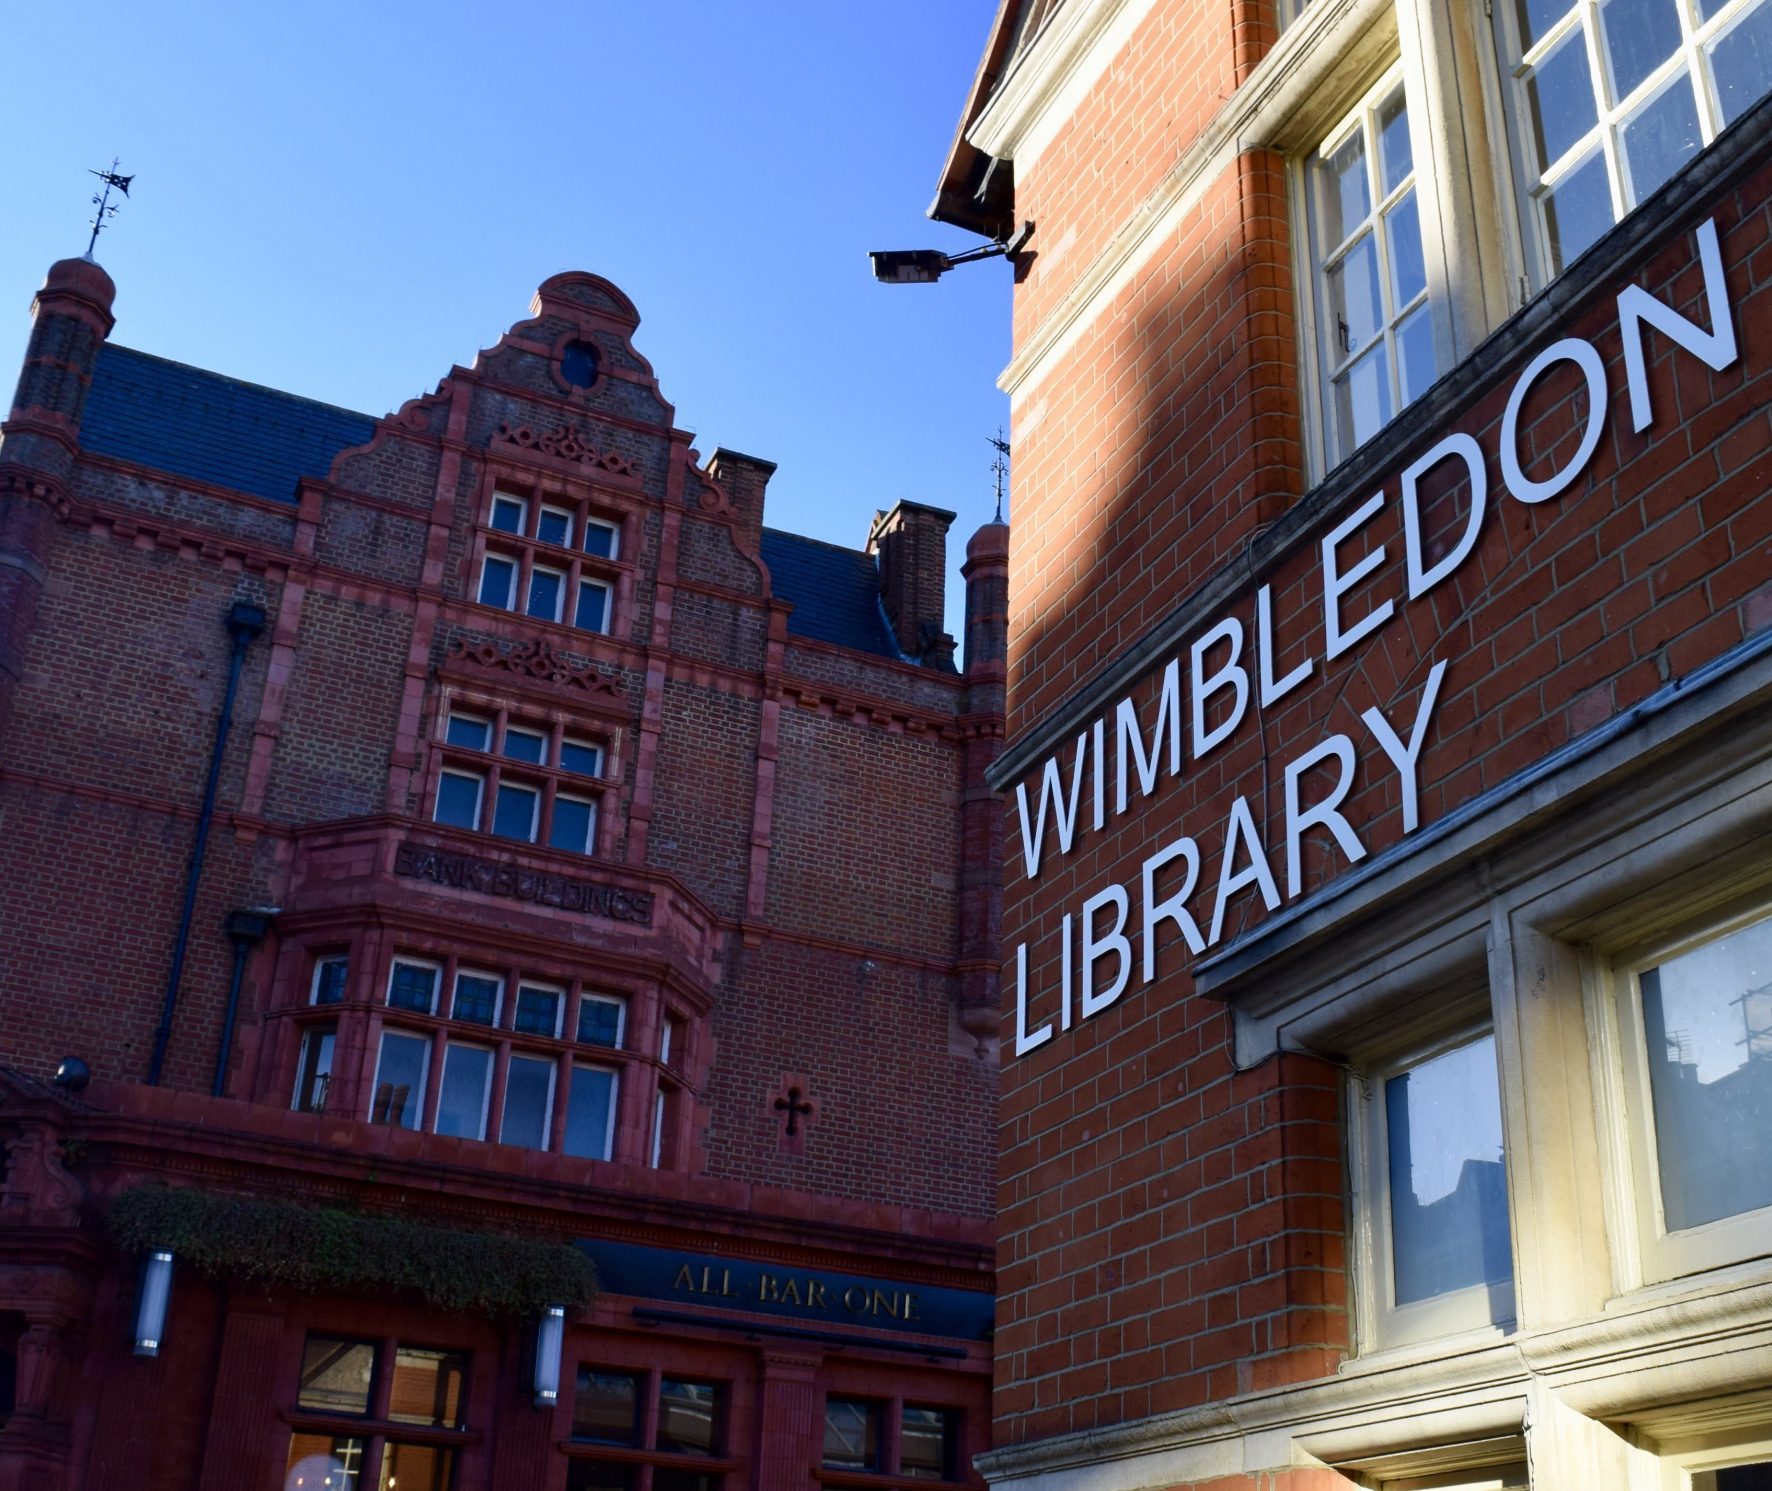 Wimbledon Library